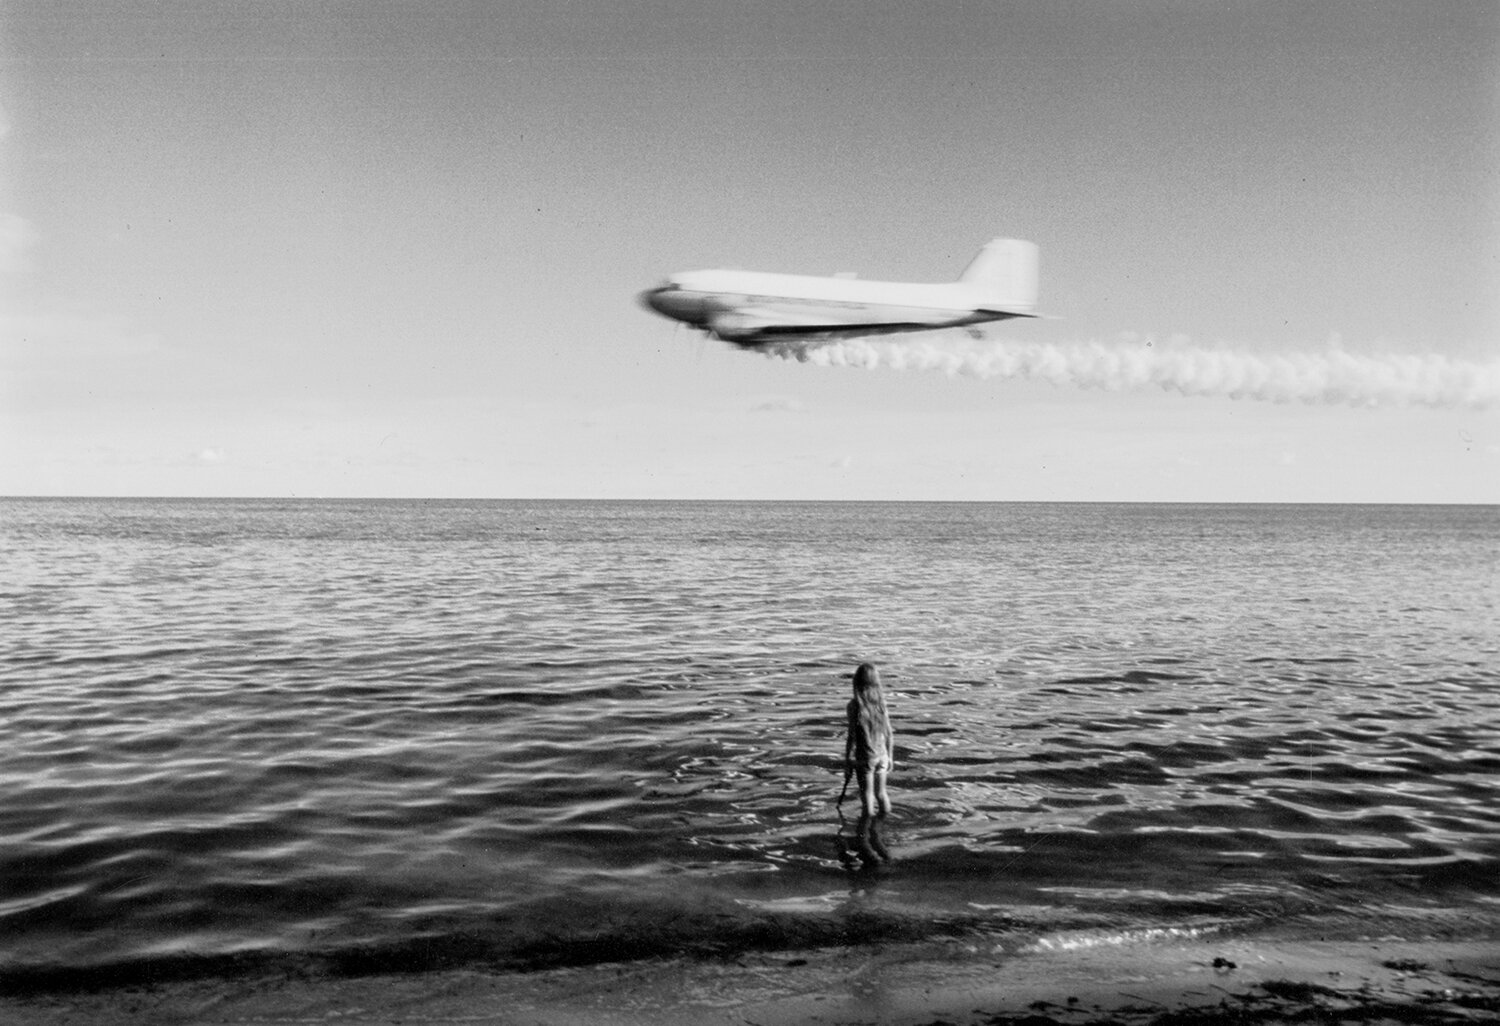   Mosquito spray plane, North Key Largo, Florida  Image: 1980/printed: 2021 Gelatin silver print 8 5⁄8 x 13 in. (image size) The Do Good Fund, Inc., 2021-010 